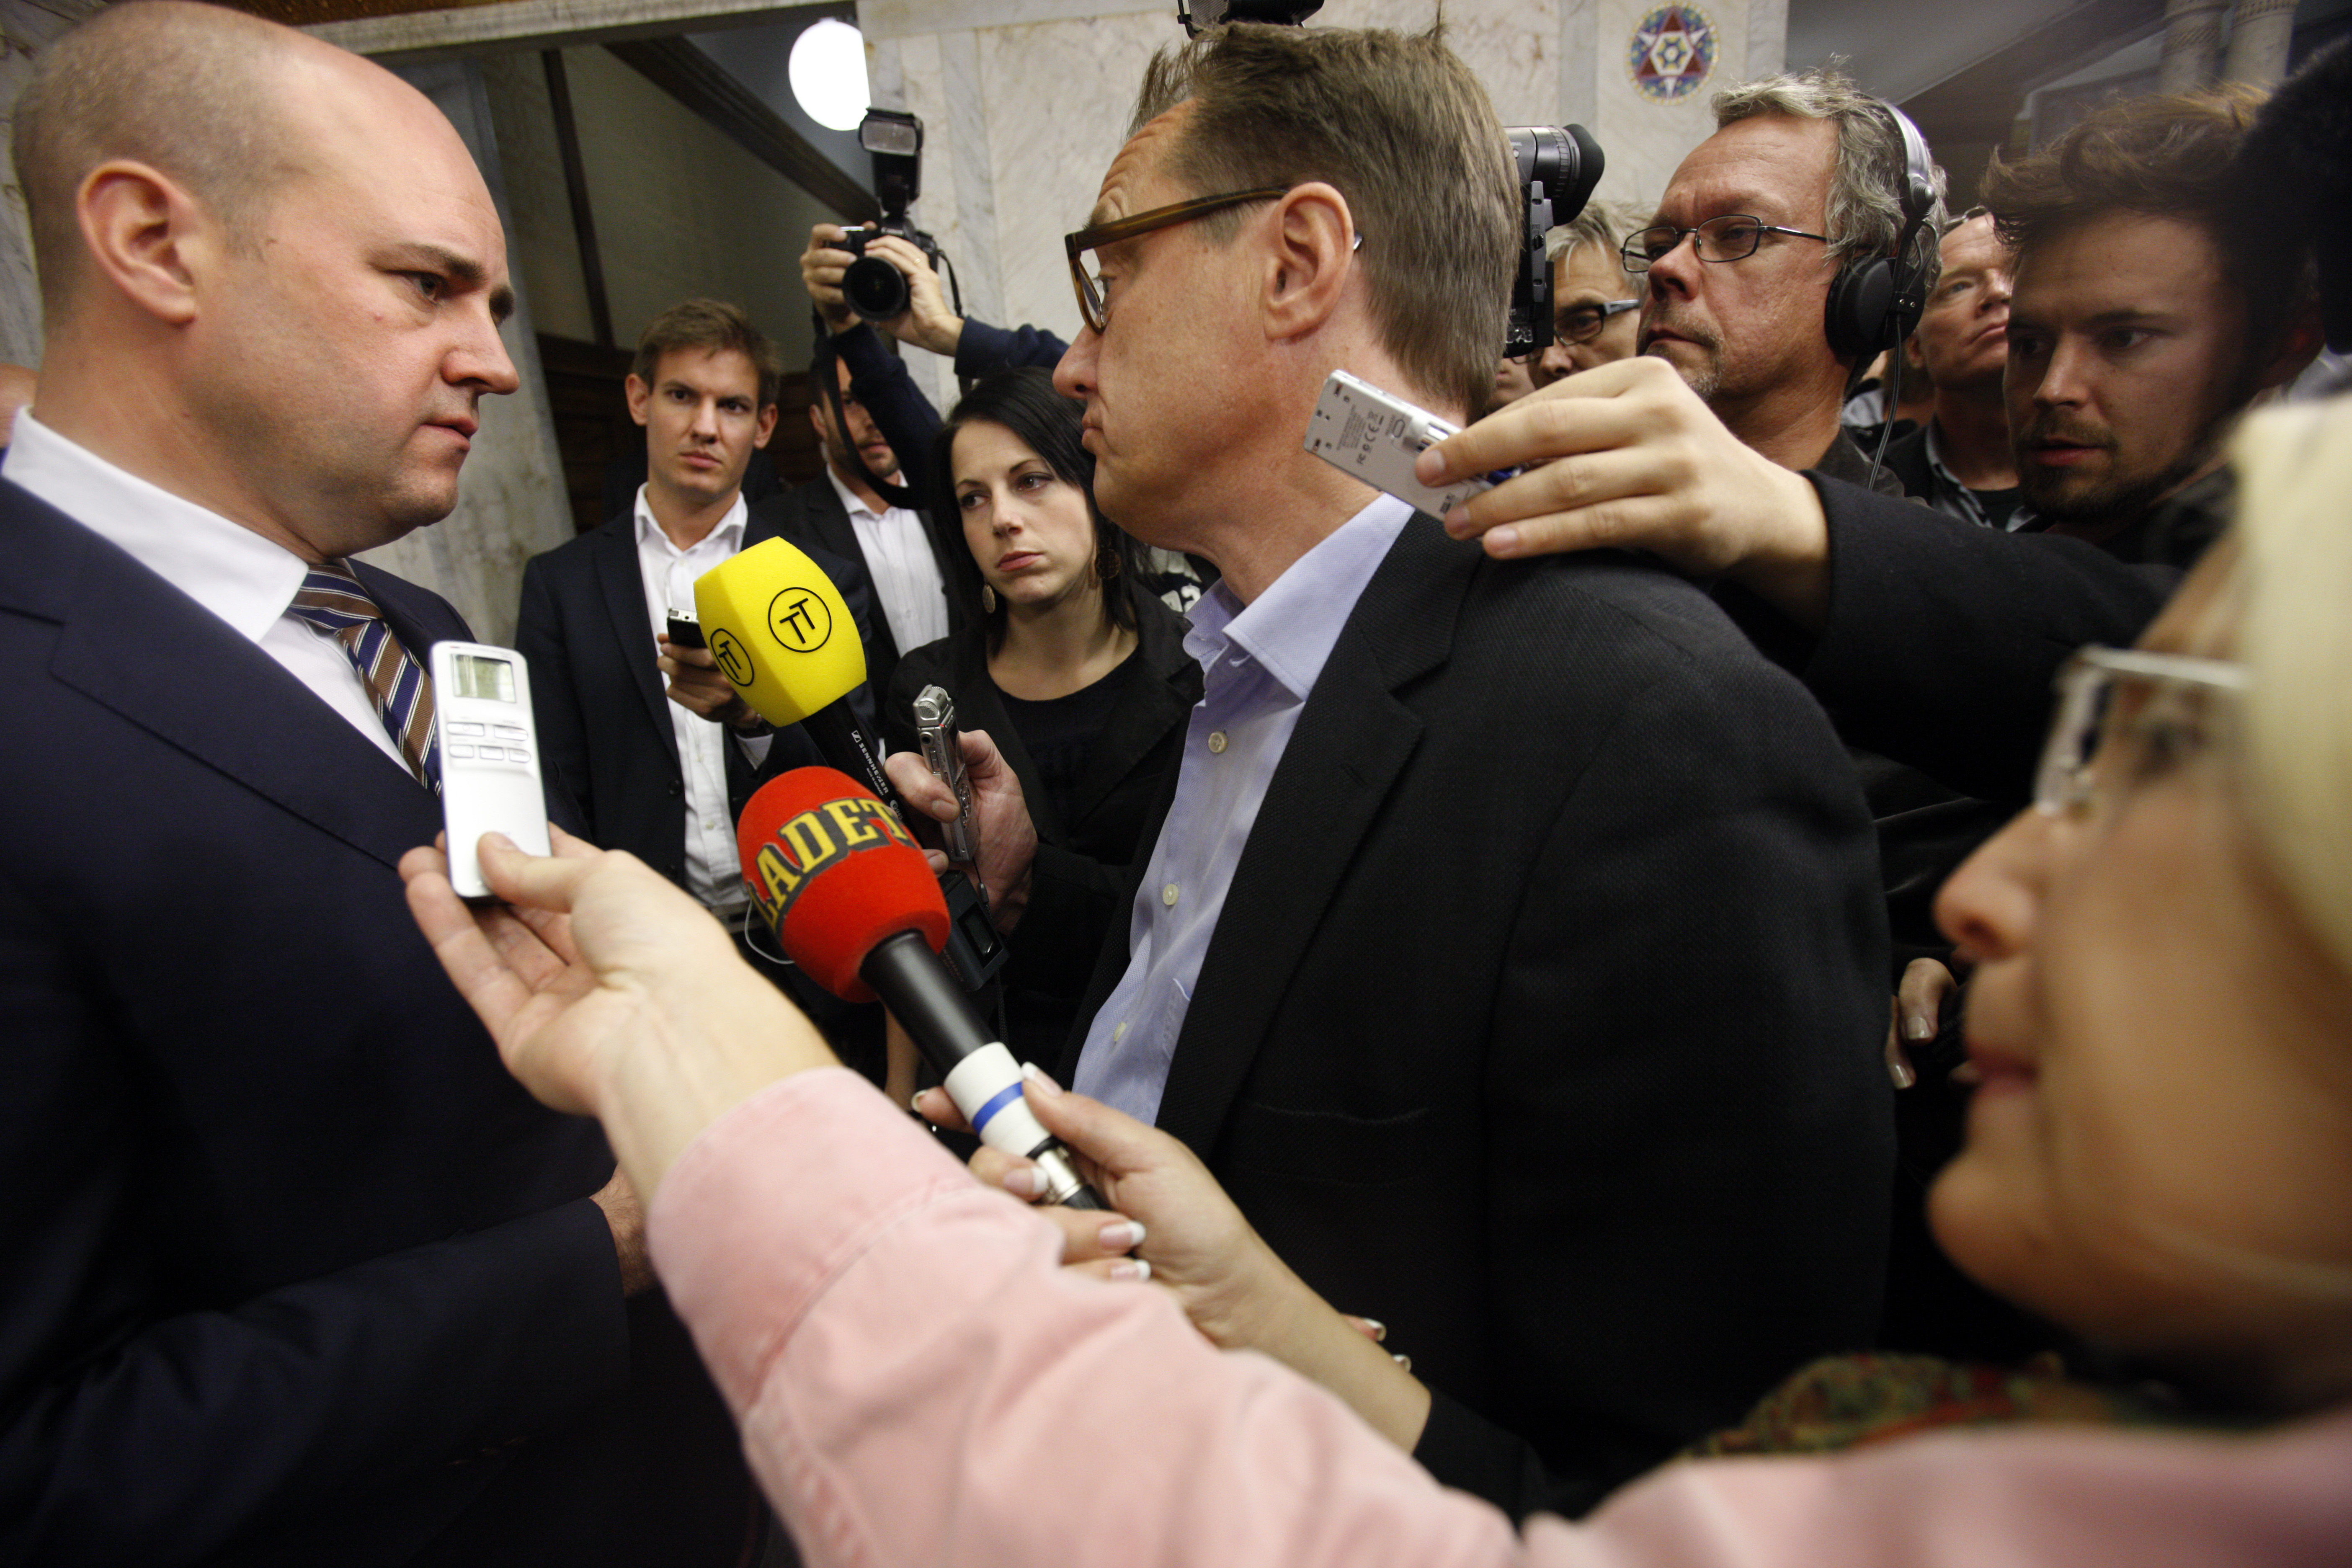 Valmyndigheten, Fredrik Reinfeldt, Riksdagen, Riksdagsvalet 2010, Alliansen, Göran Hägglund, Mandat, Regeringen